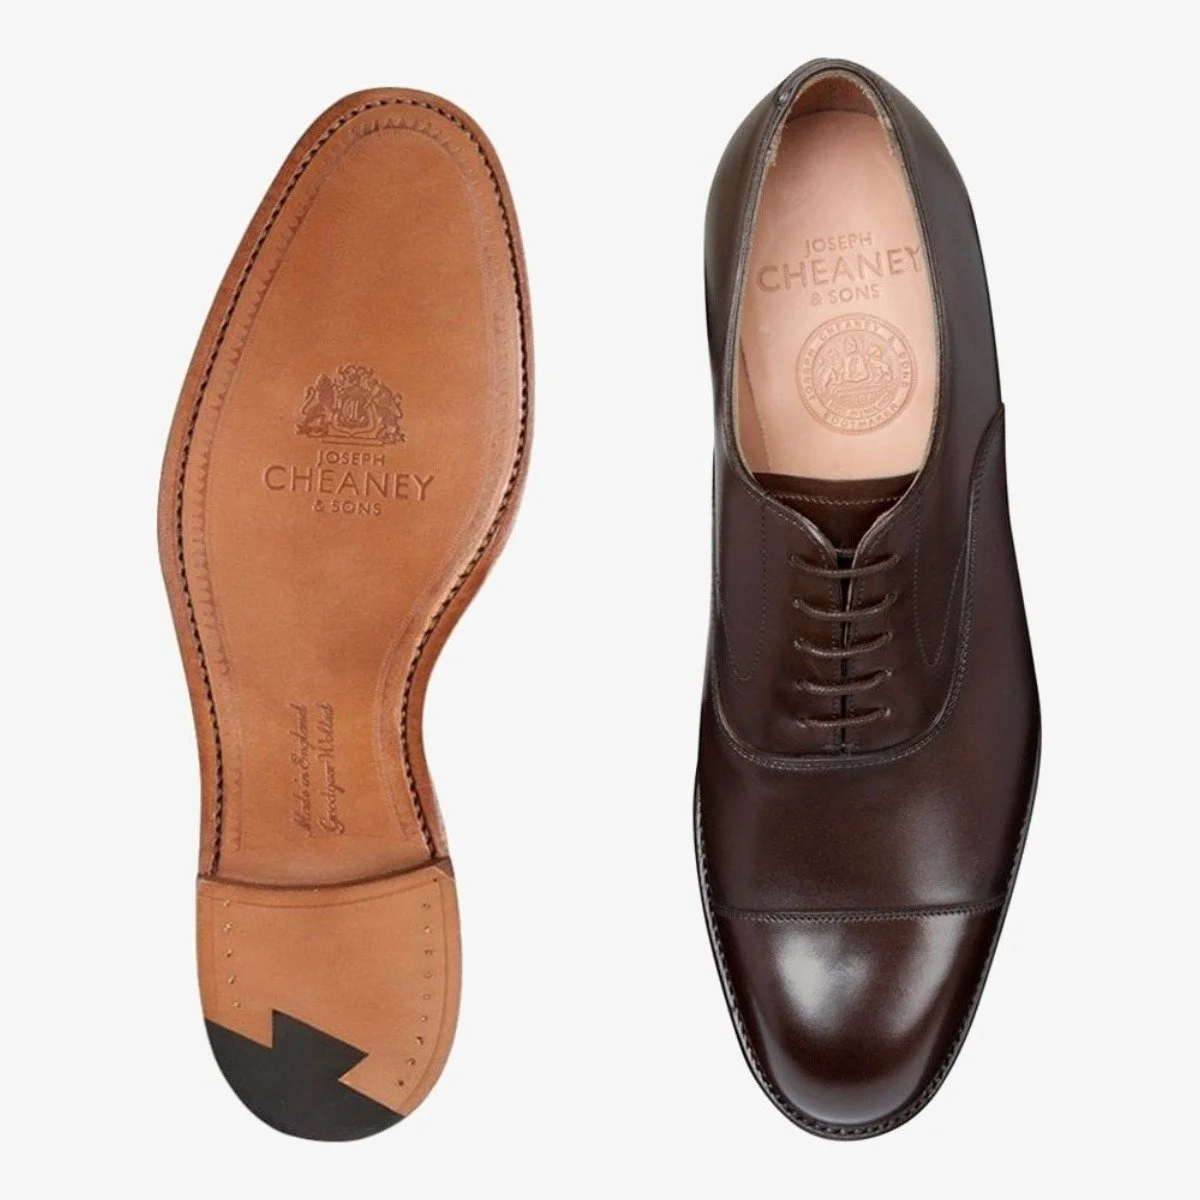 Cheaney Alfred mocha toe cap men's oxford shoes